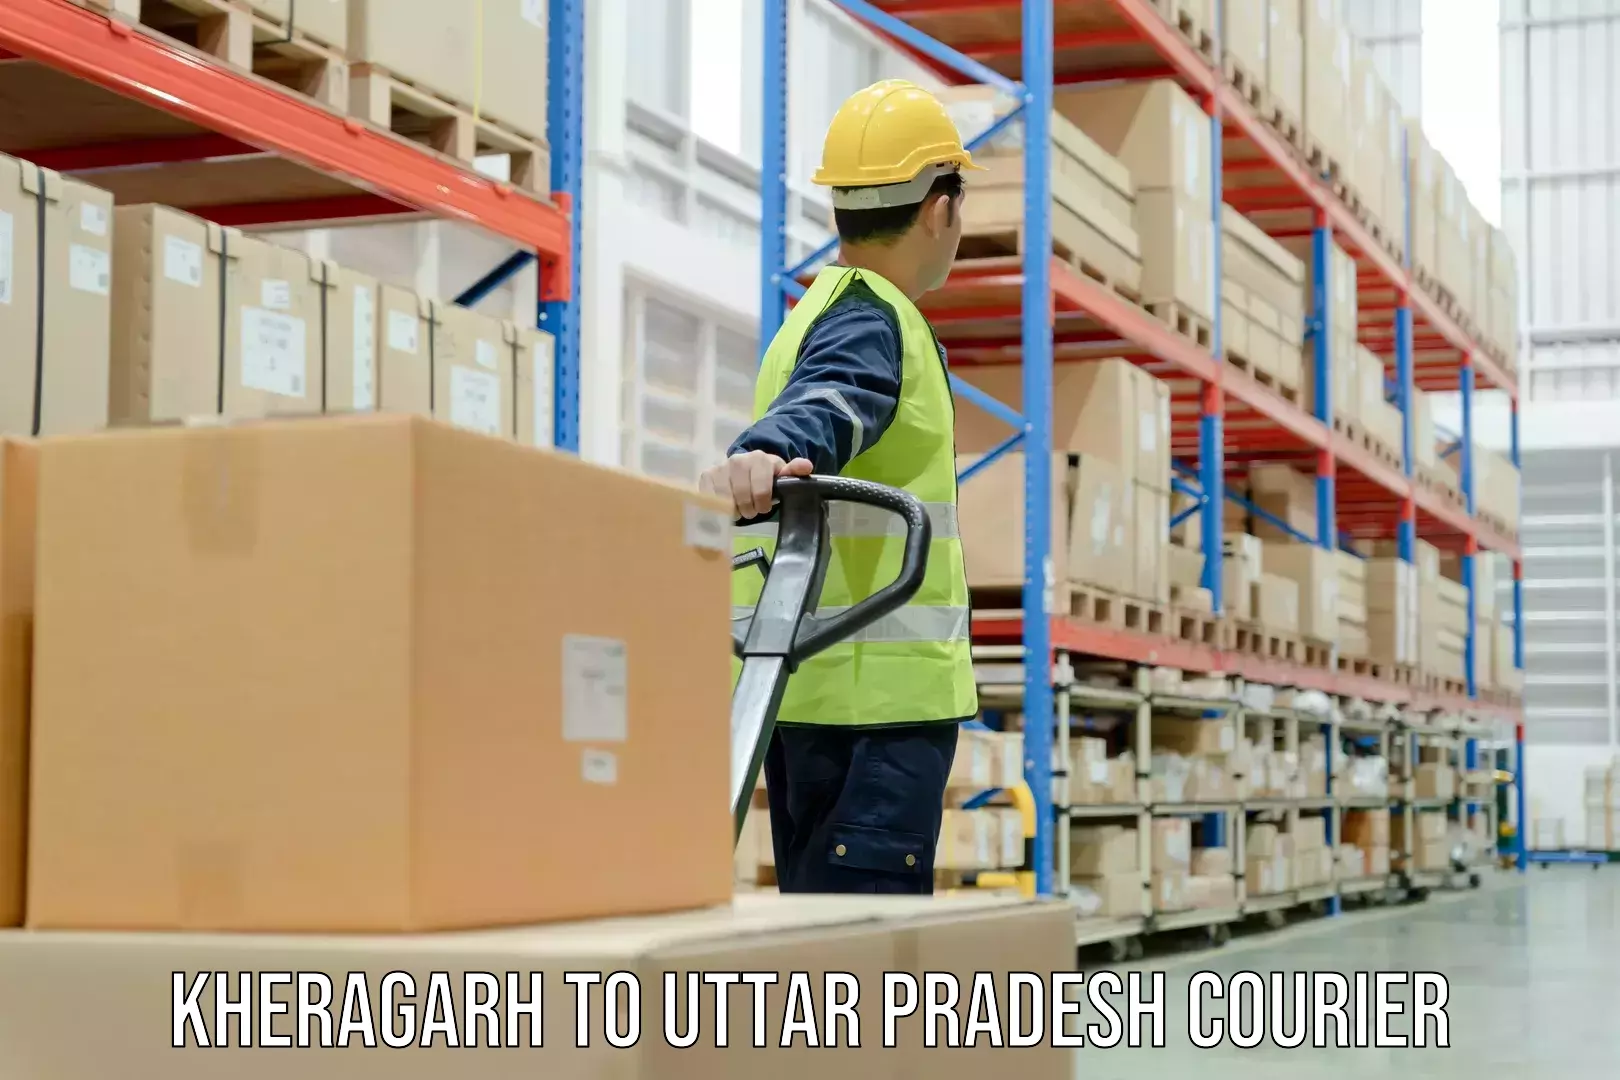 Shipping and handling Kheragarh to Uttar Pradesh